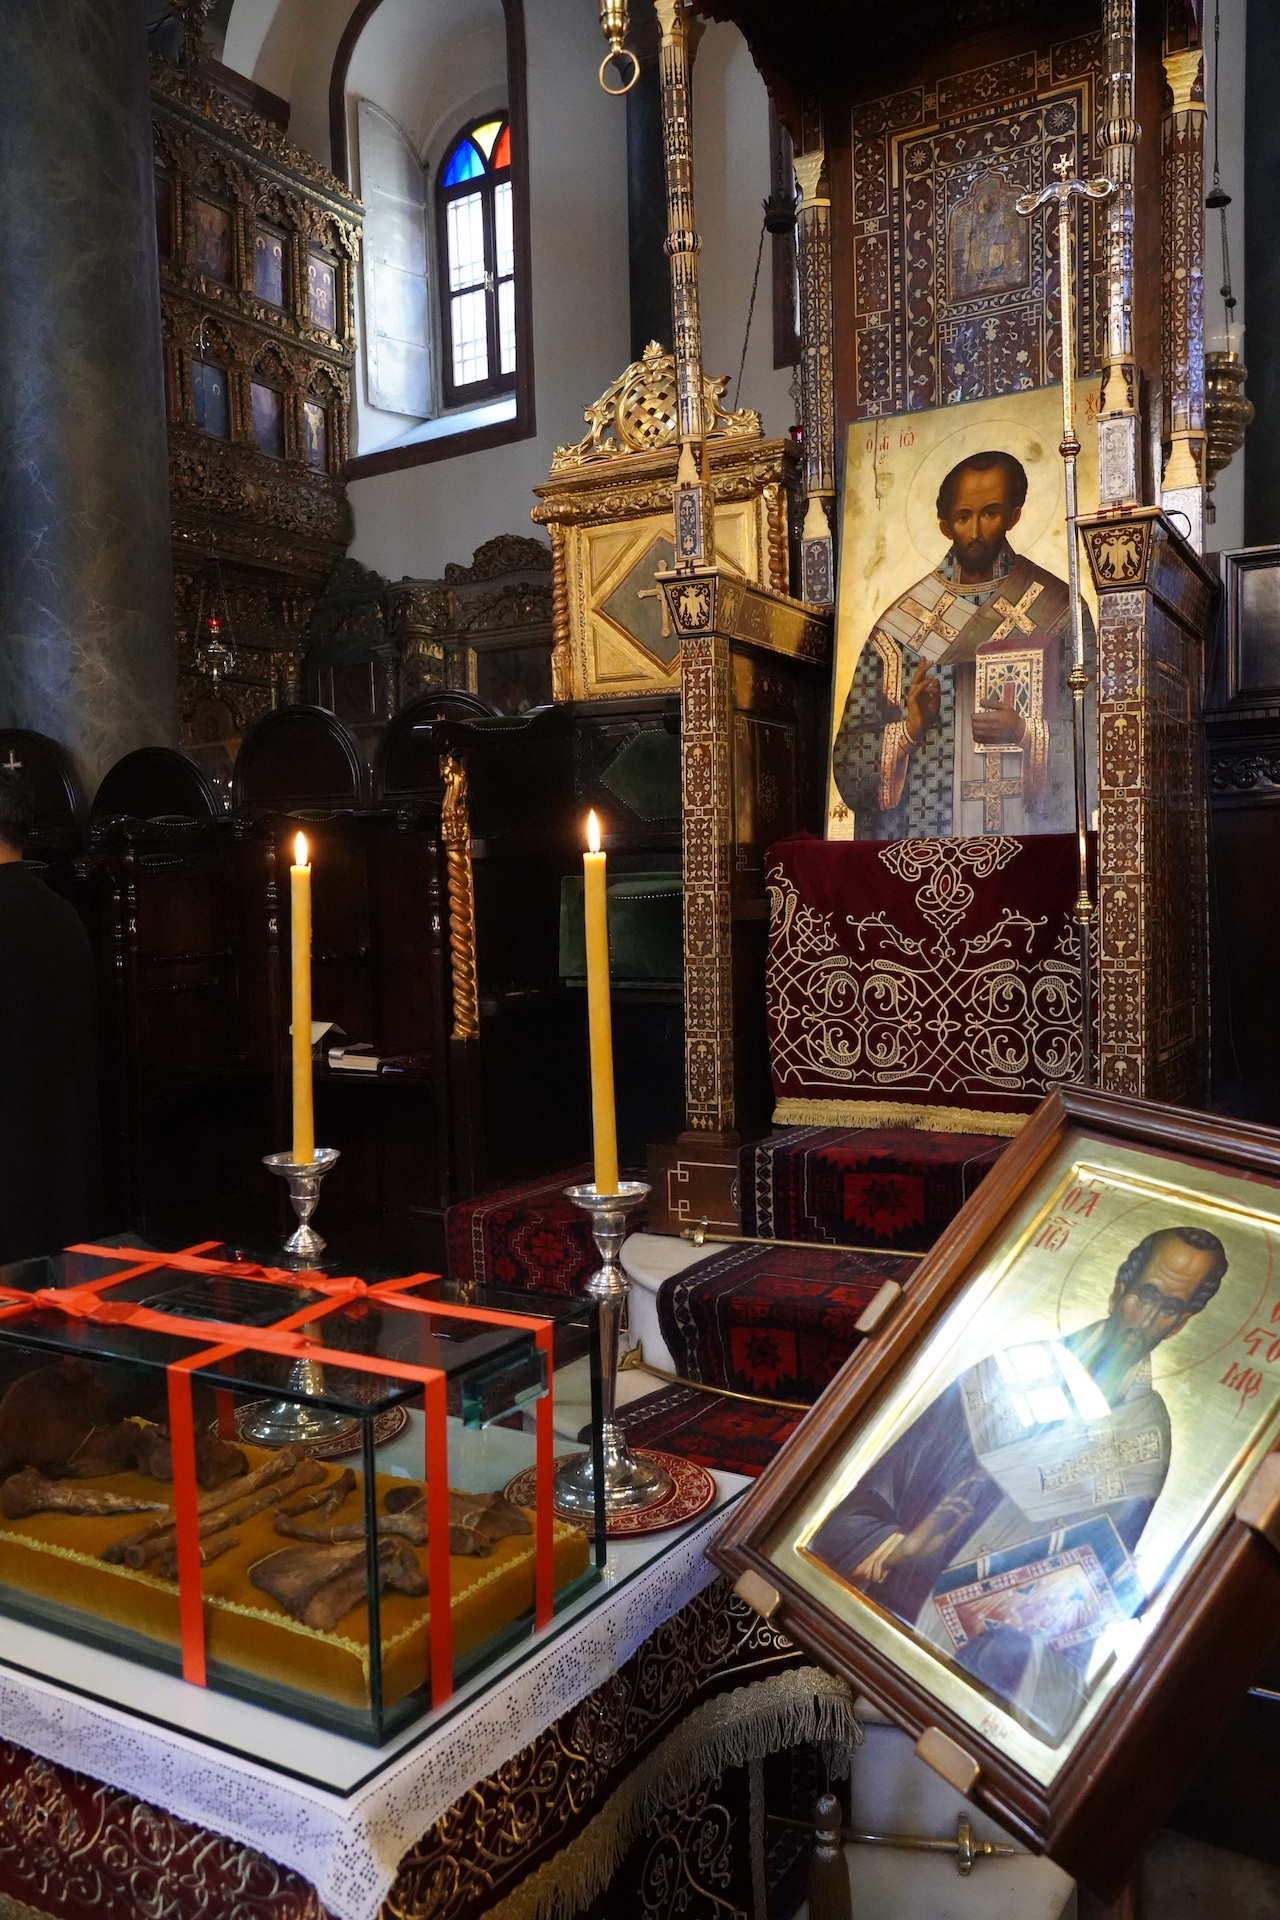 The Ecumenical Patriarchate honours the memory of Saint John Chrysostom